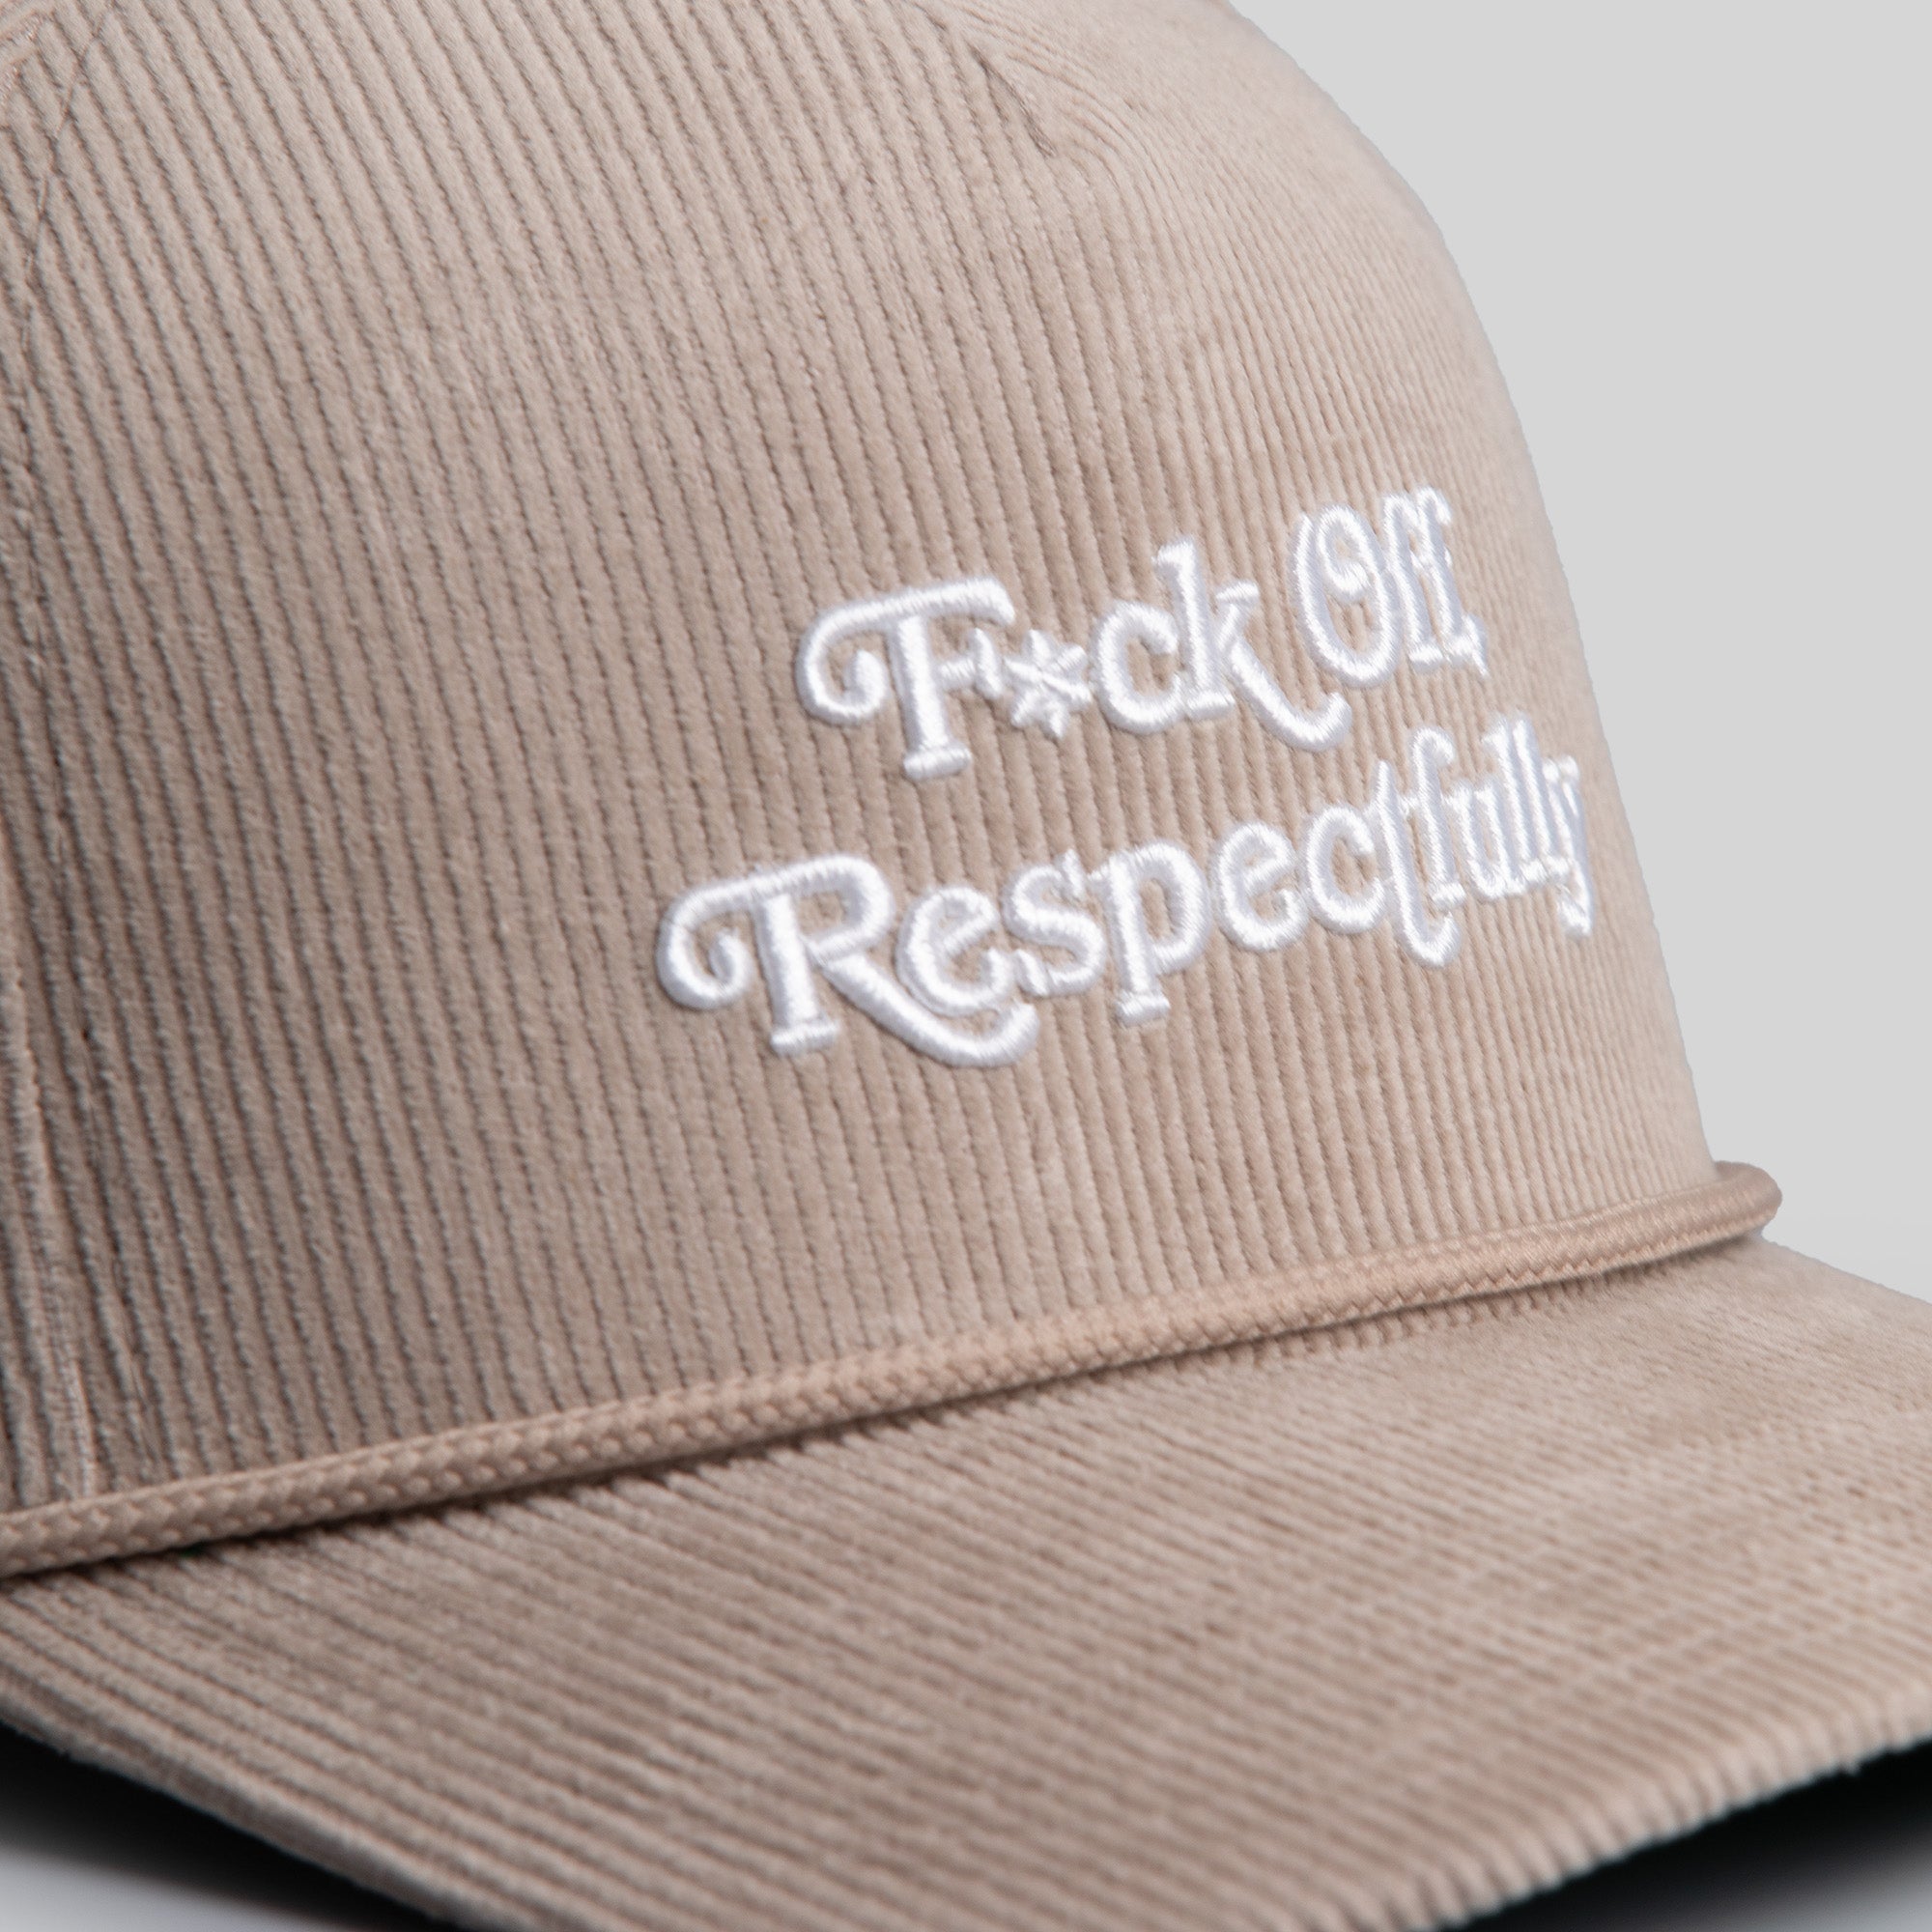 RESPECTFULLY WARM GREY CORDUROY TRUCKER HAT